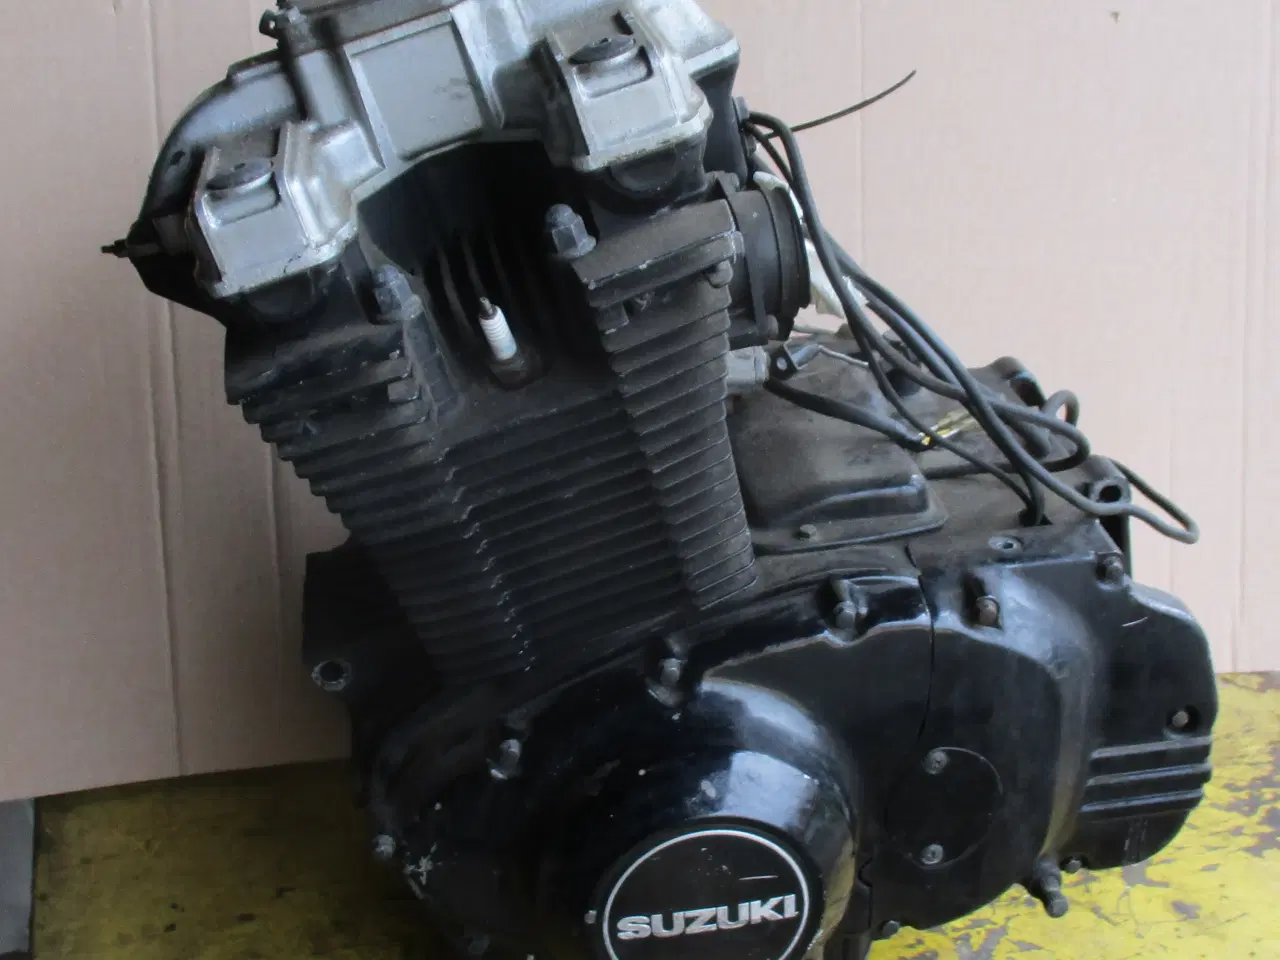 Billede 2 - Suzuki GS 500 E motor